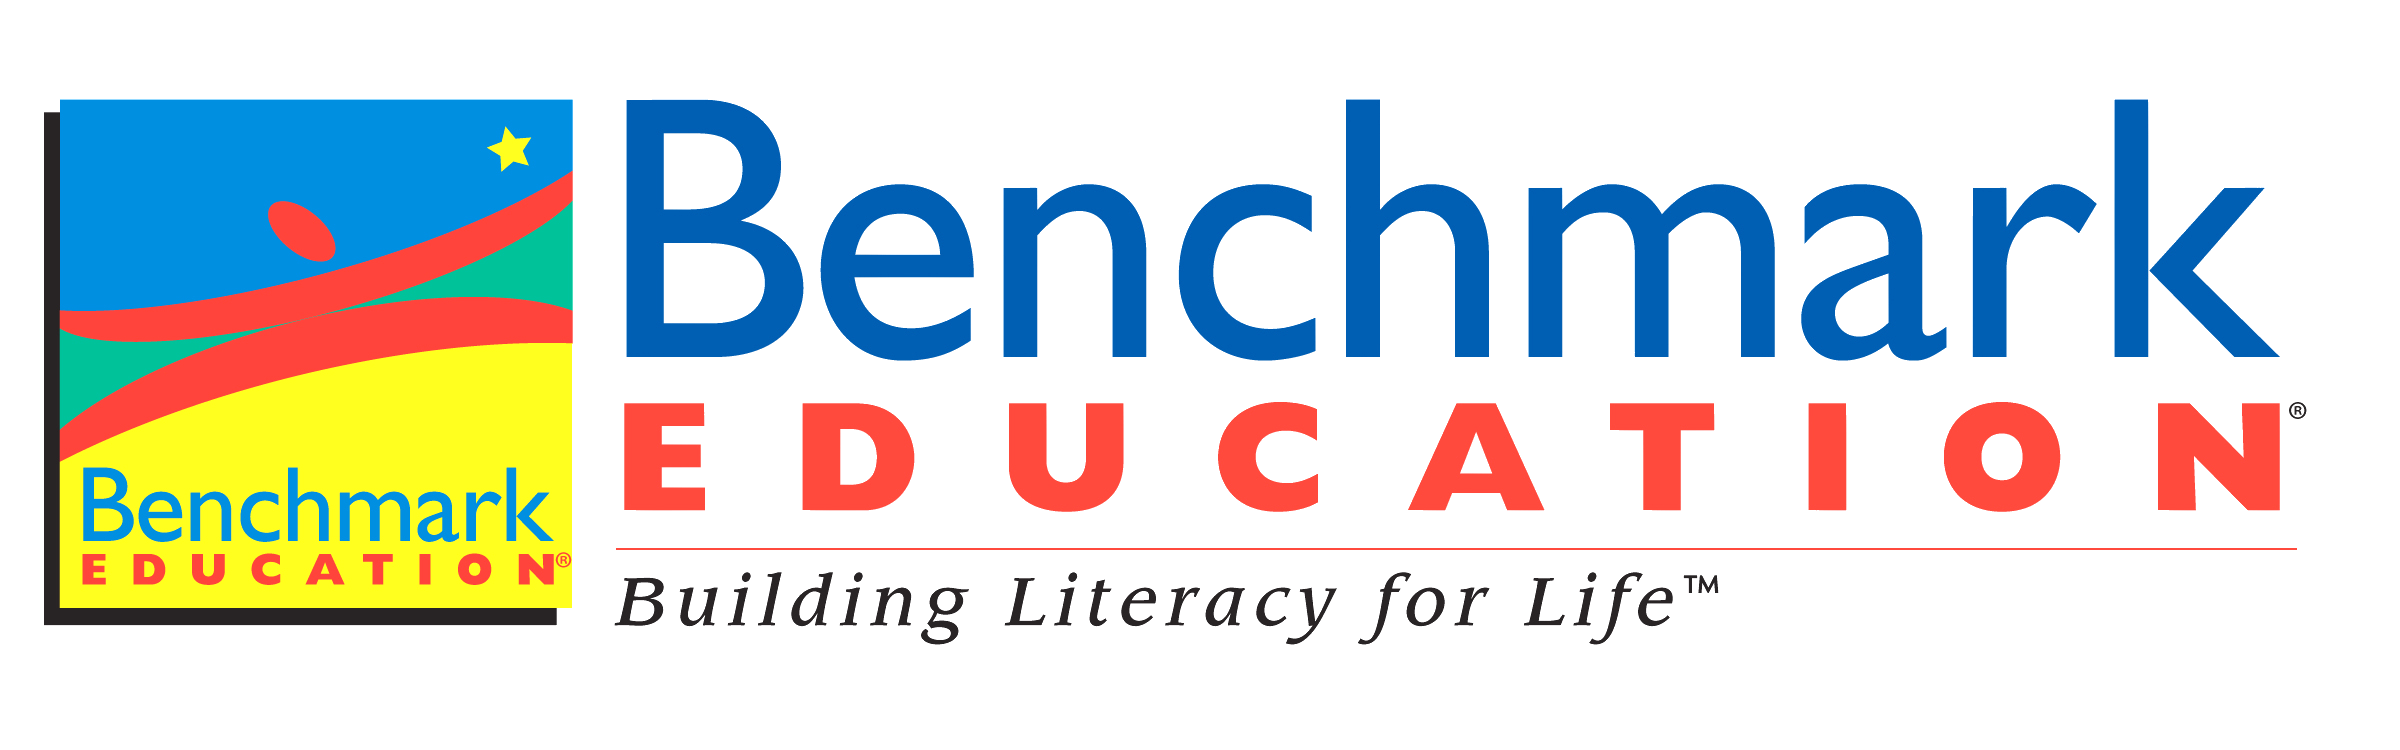 Benchmark Education logo